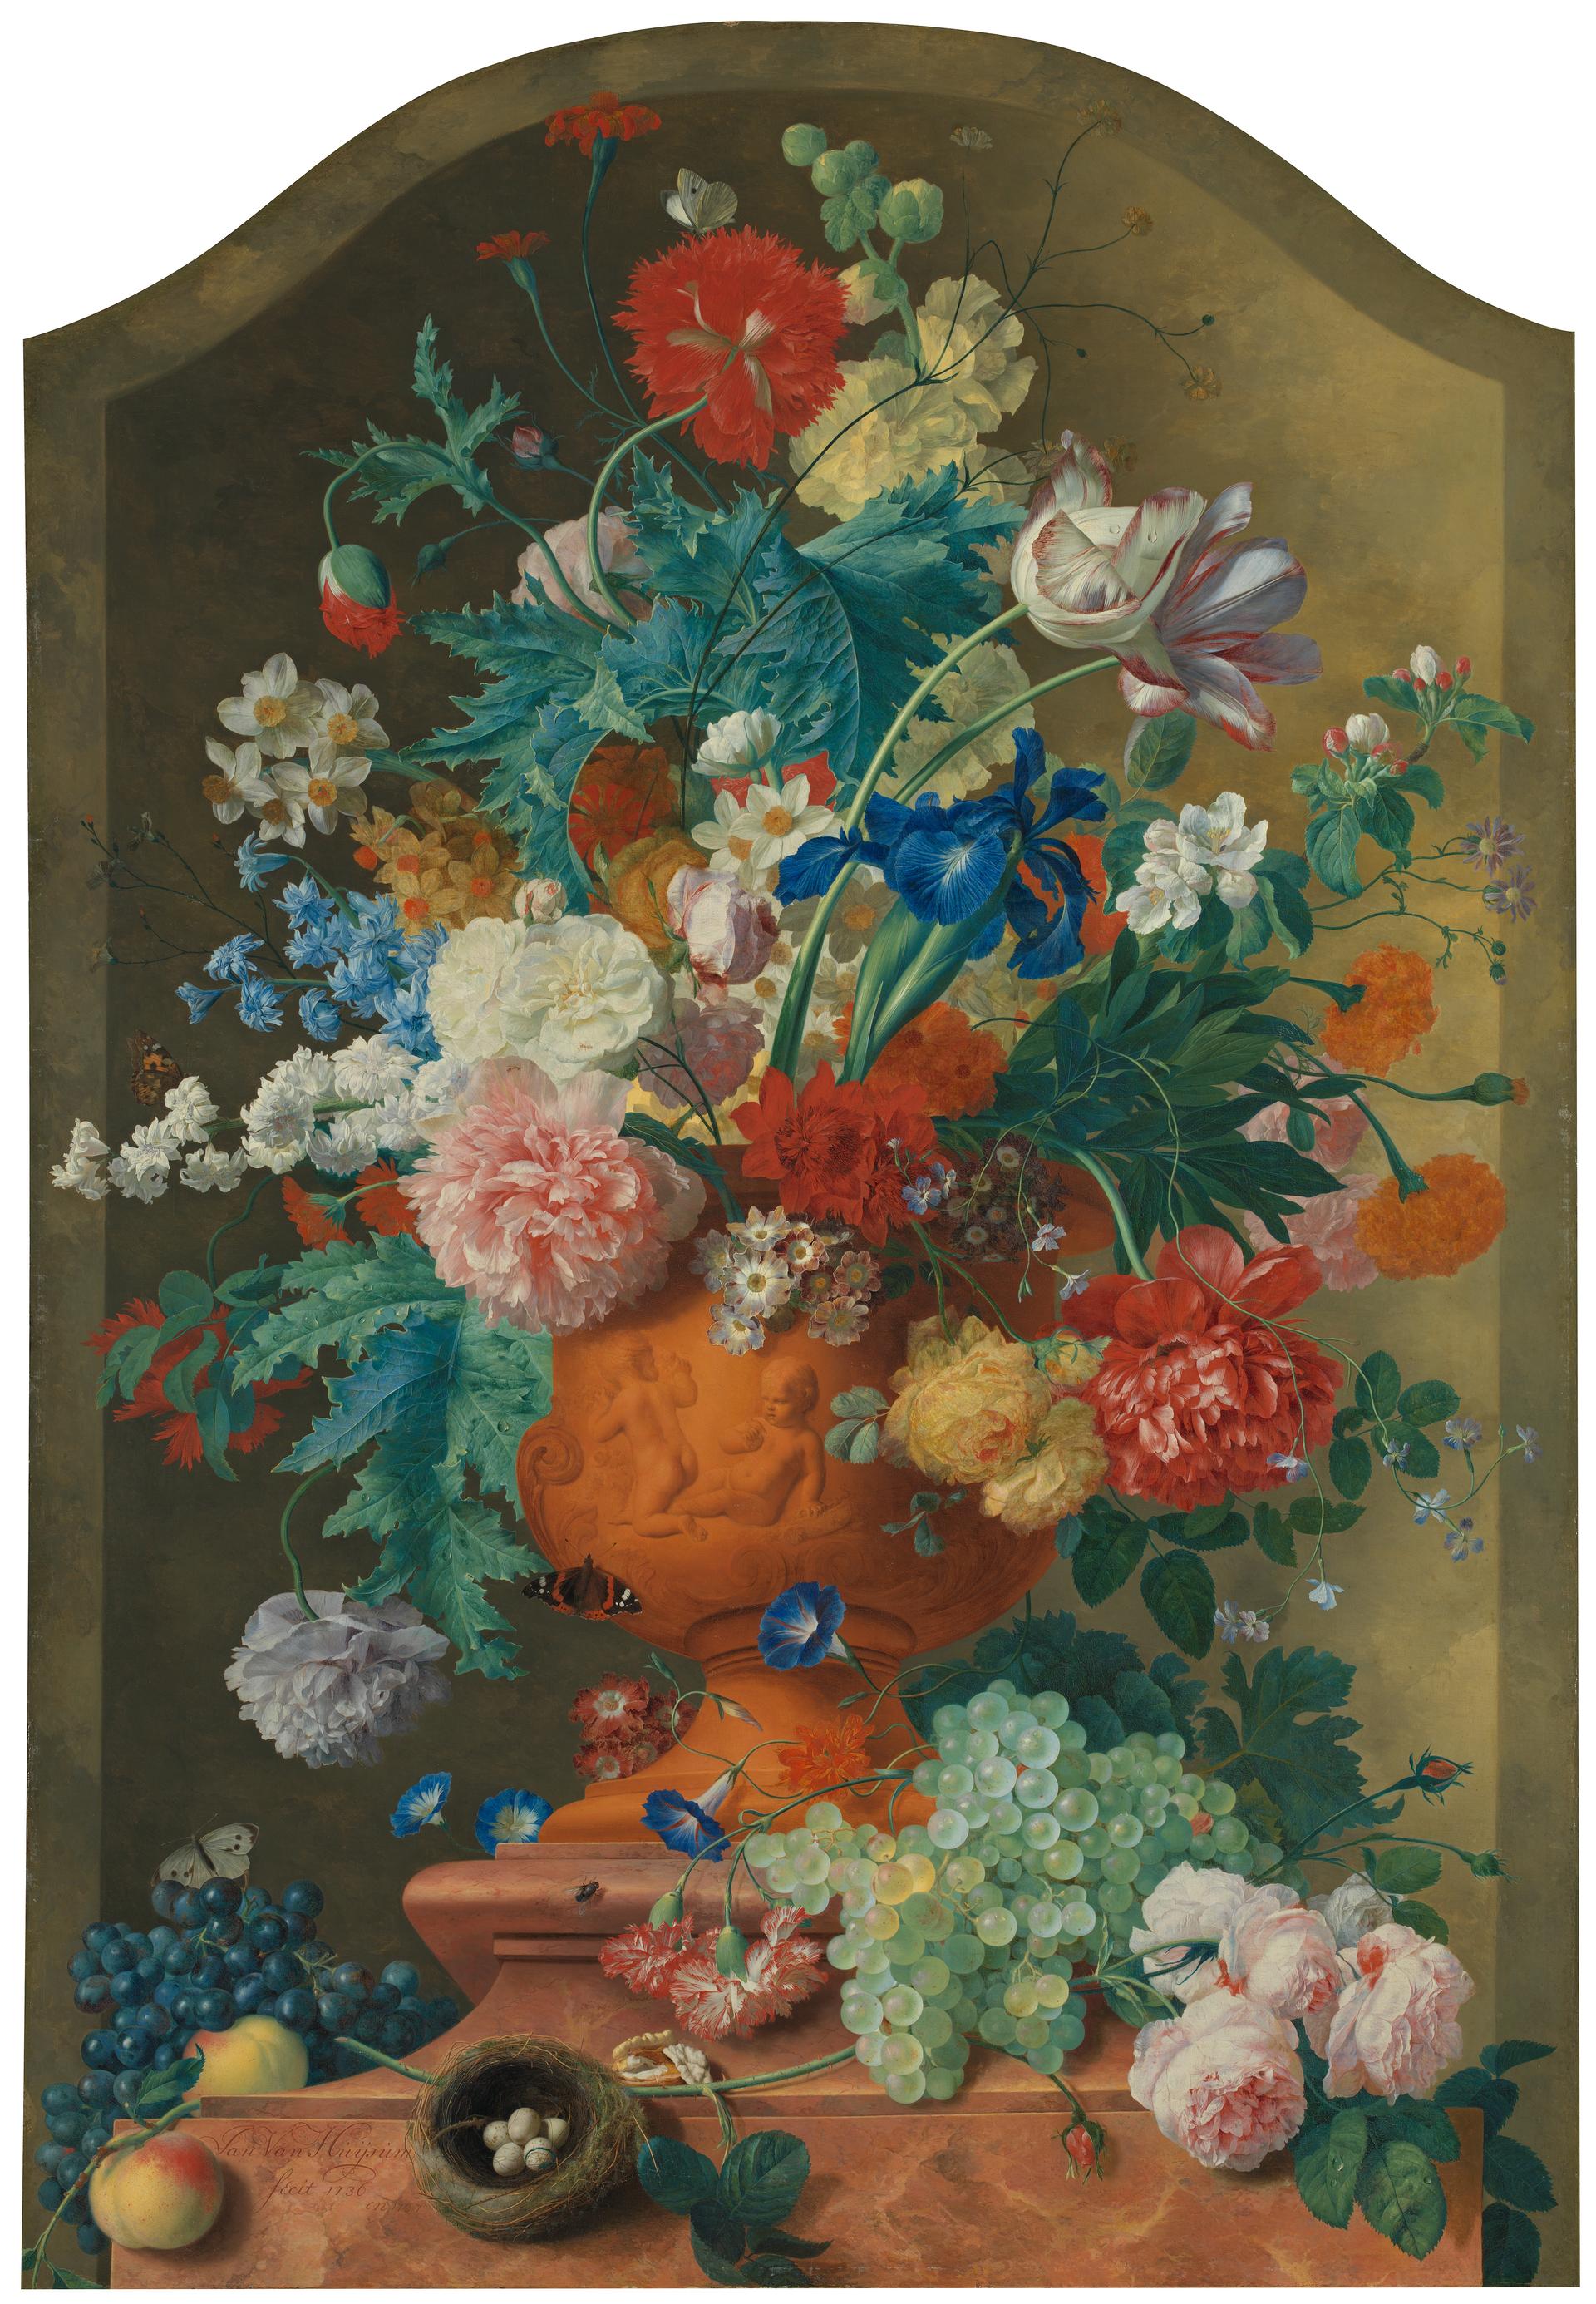 Lux Quadro Stampa su Tela Jan Van OS Poppies Peonies And Other Flowers in a Terracotta Vase con Cornice in Legno Oro Classico Misura 53x43 CM 